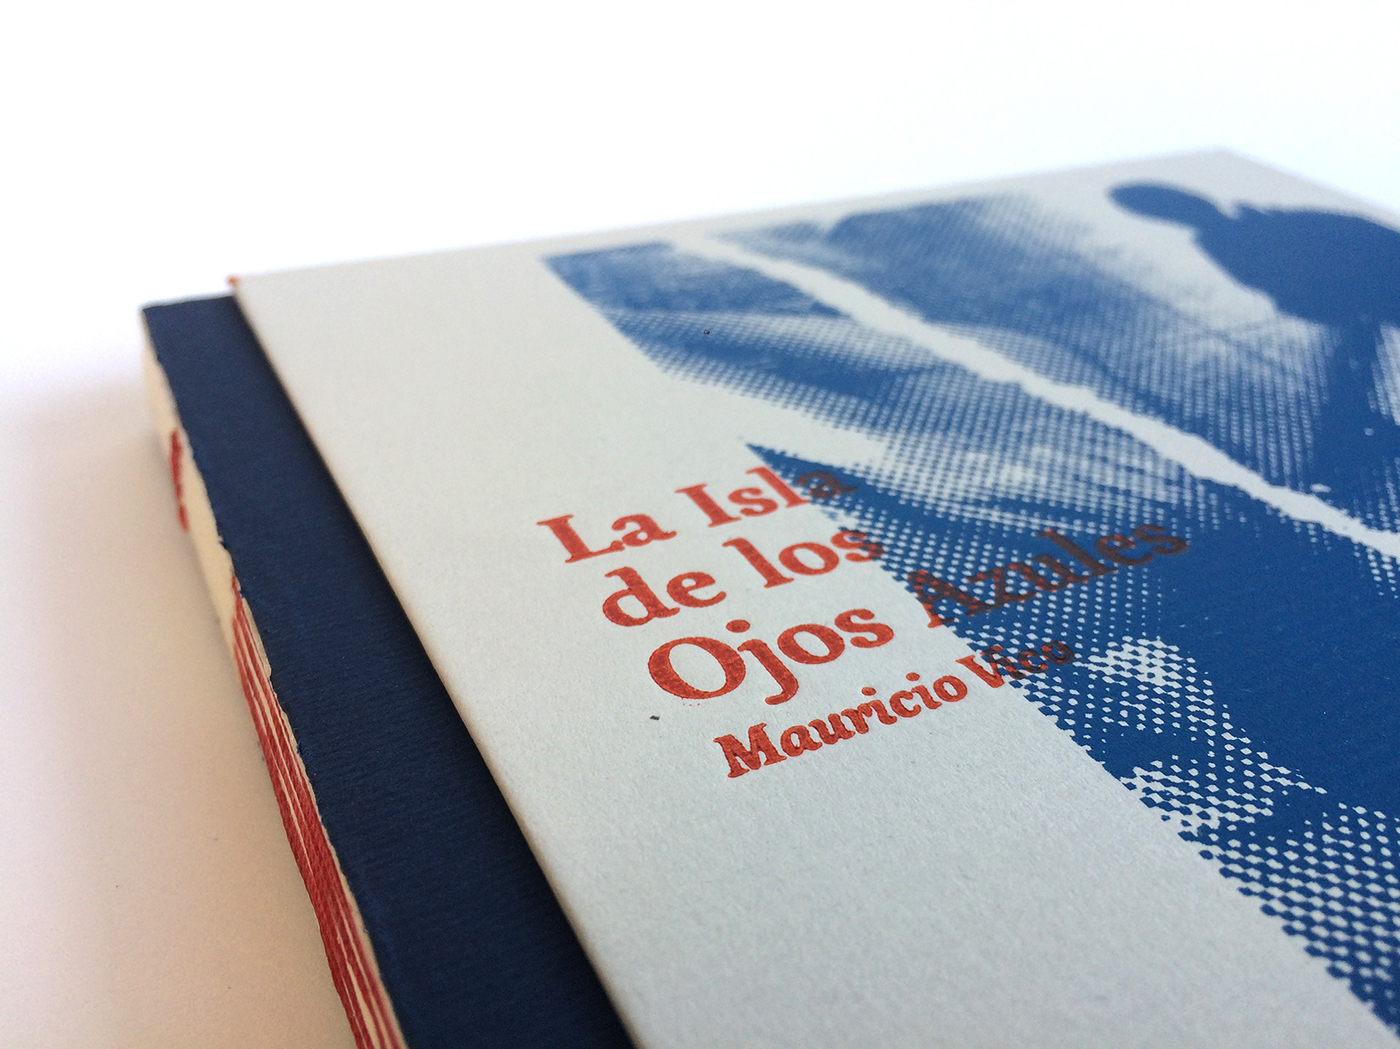 editorial design  Diseño editorial diseño chileno edu leblanc gabriel maragaño gentecomún diseño serigrafia letterpress chile